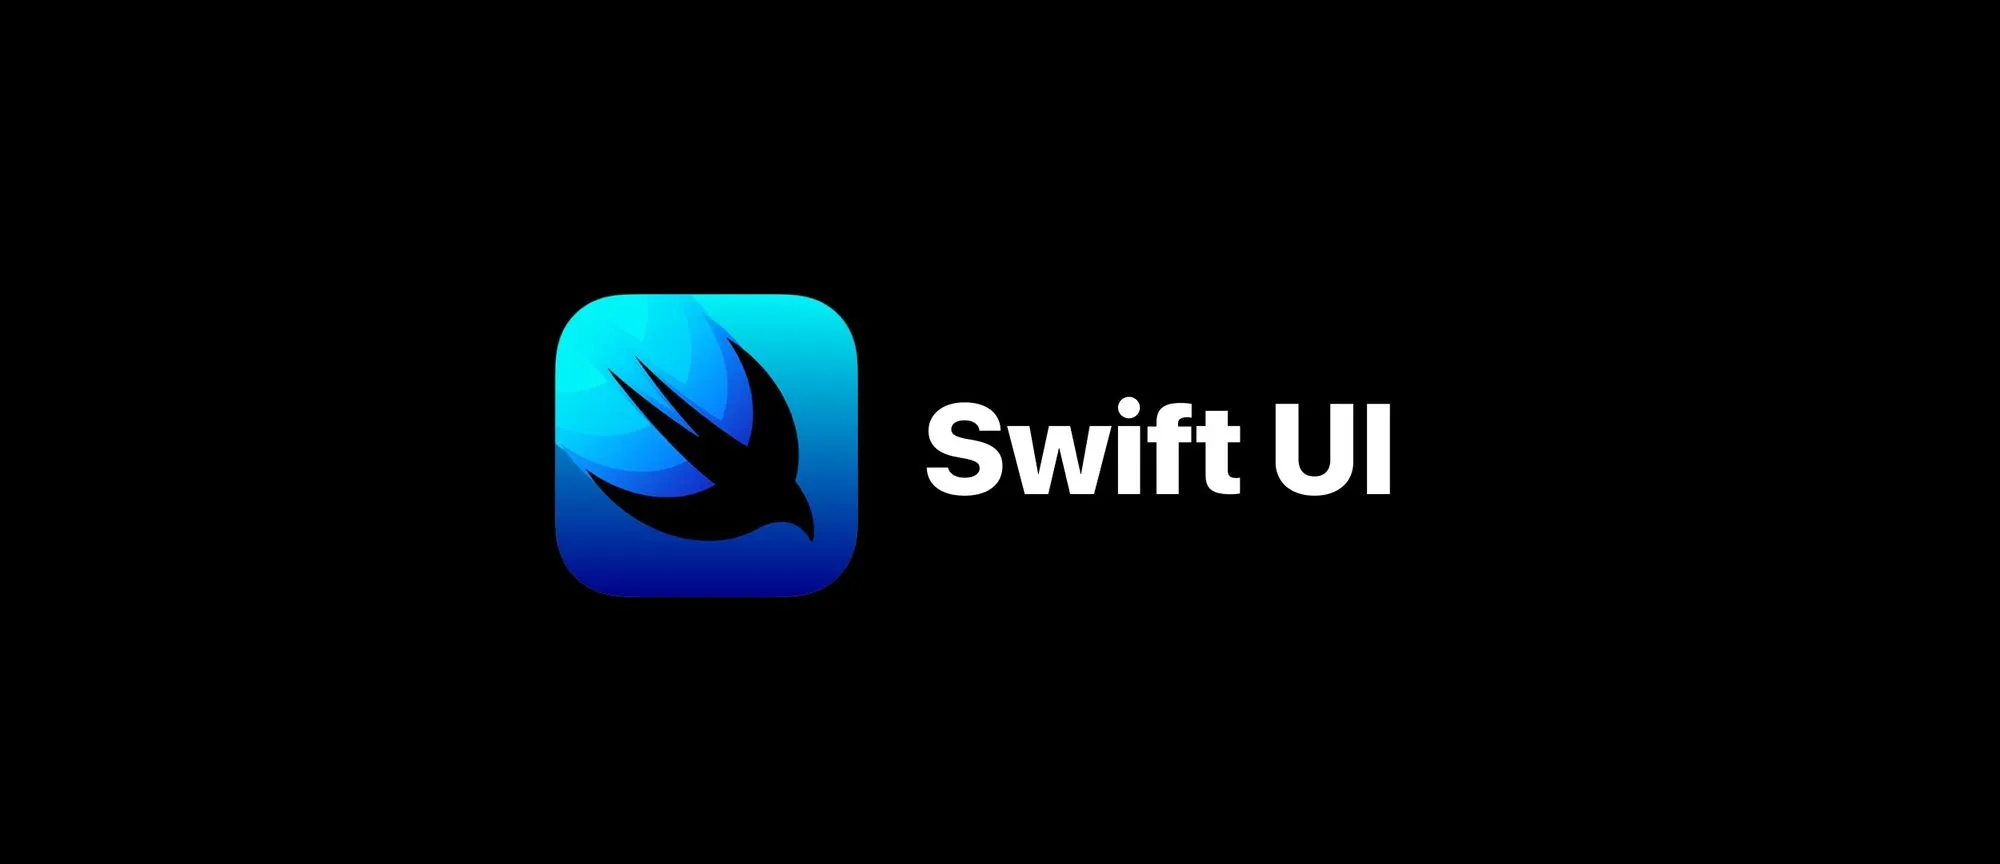 Swift UI